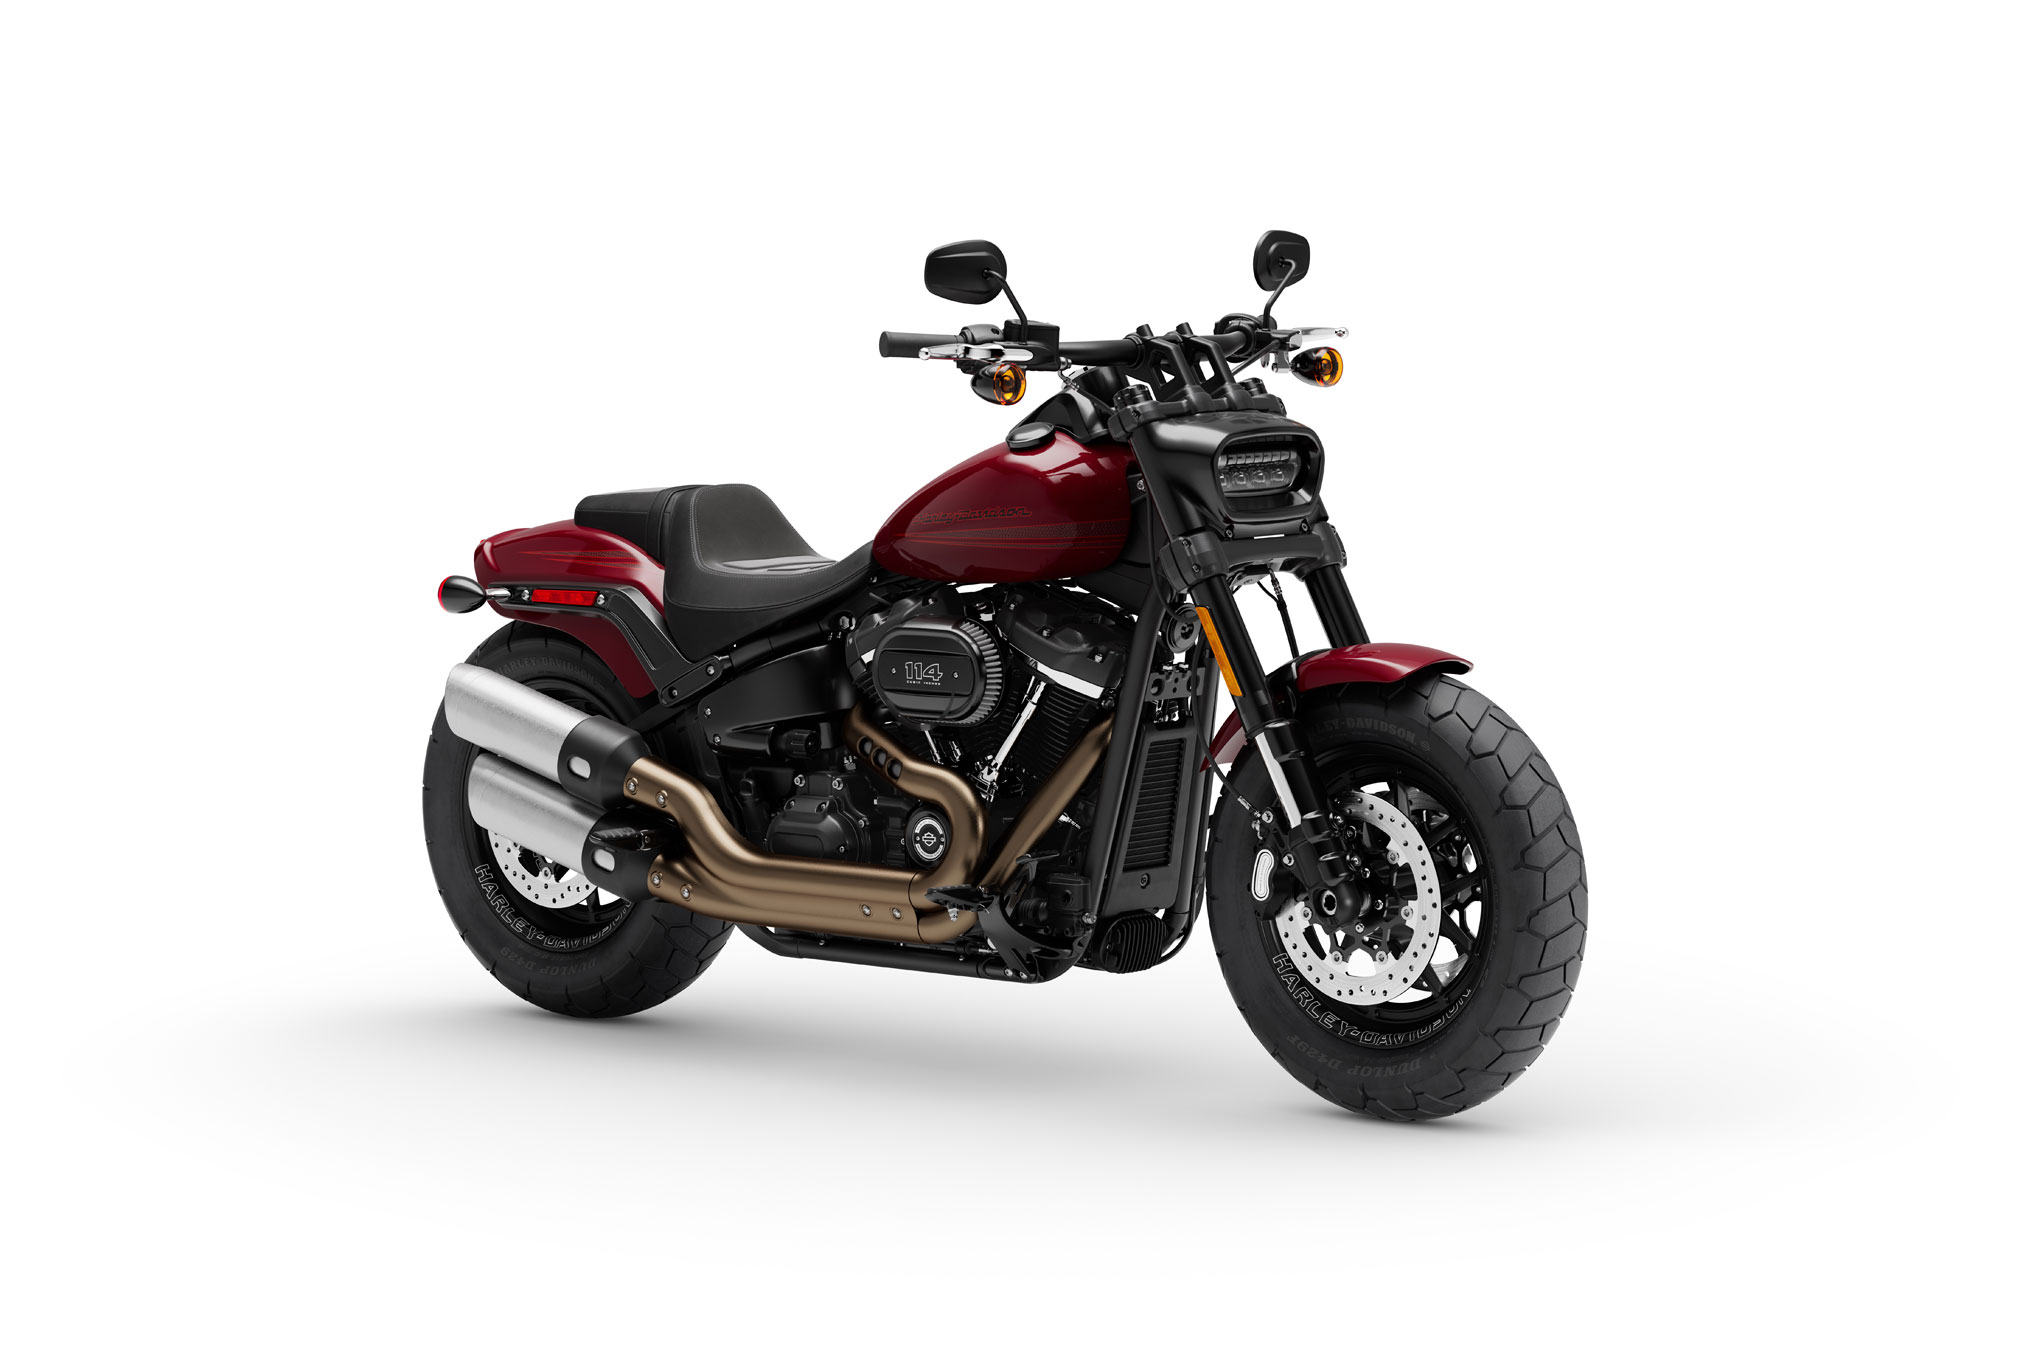 2020 Harley Davidson Fat Bob 114 Guide Total Motorcycle